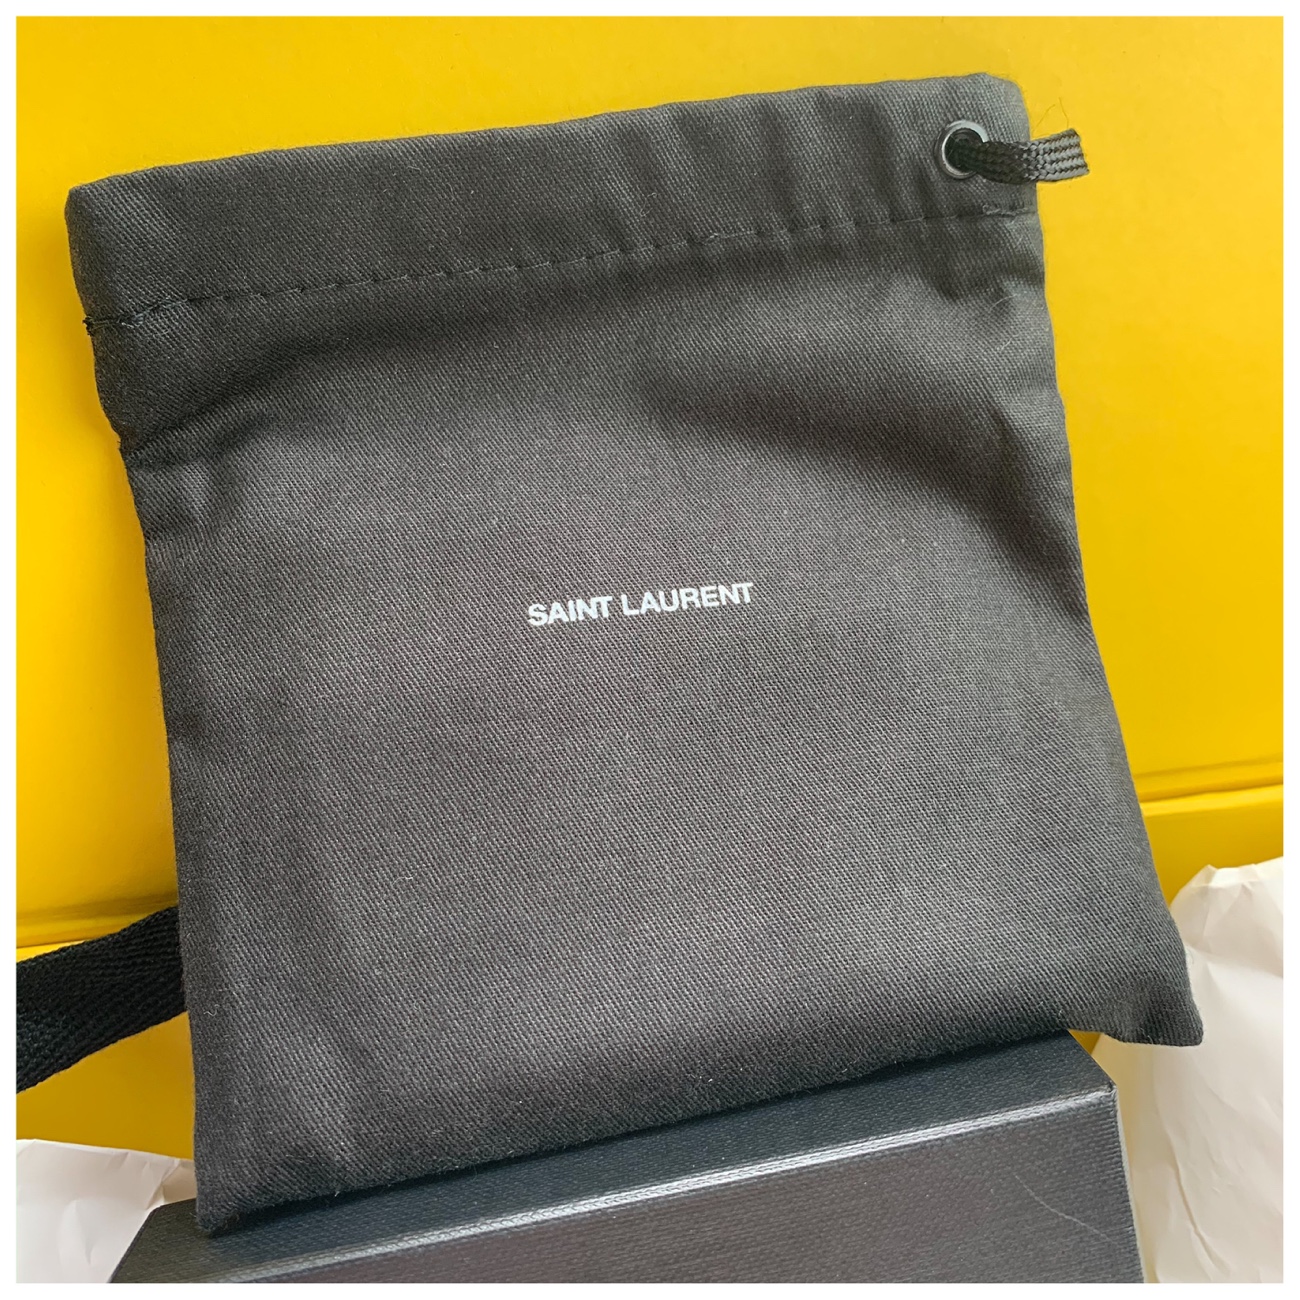 Saint Laurent beige Quilted Leather Card Case